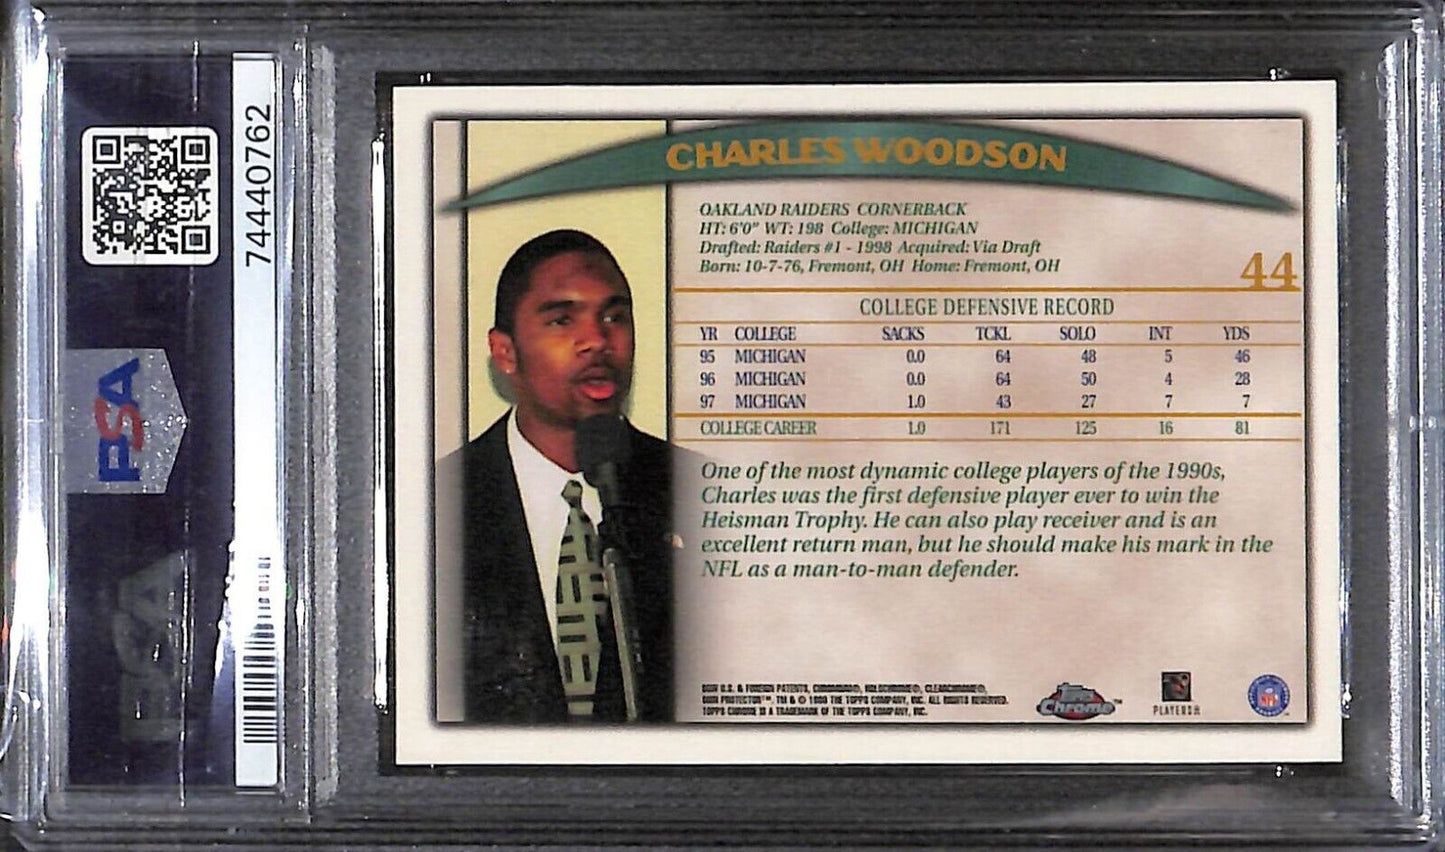 1998 TOPPS CHROME CHARLES WOODSON #44 RC ROOKIE PSA 9 MINT HALL OF FAMER